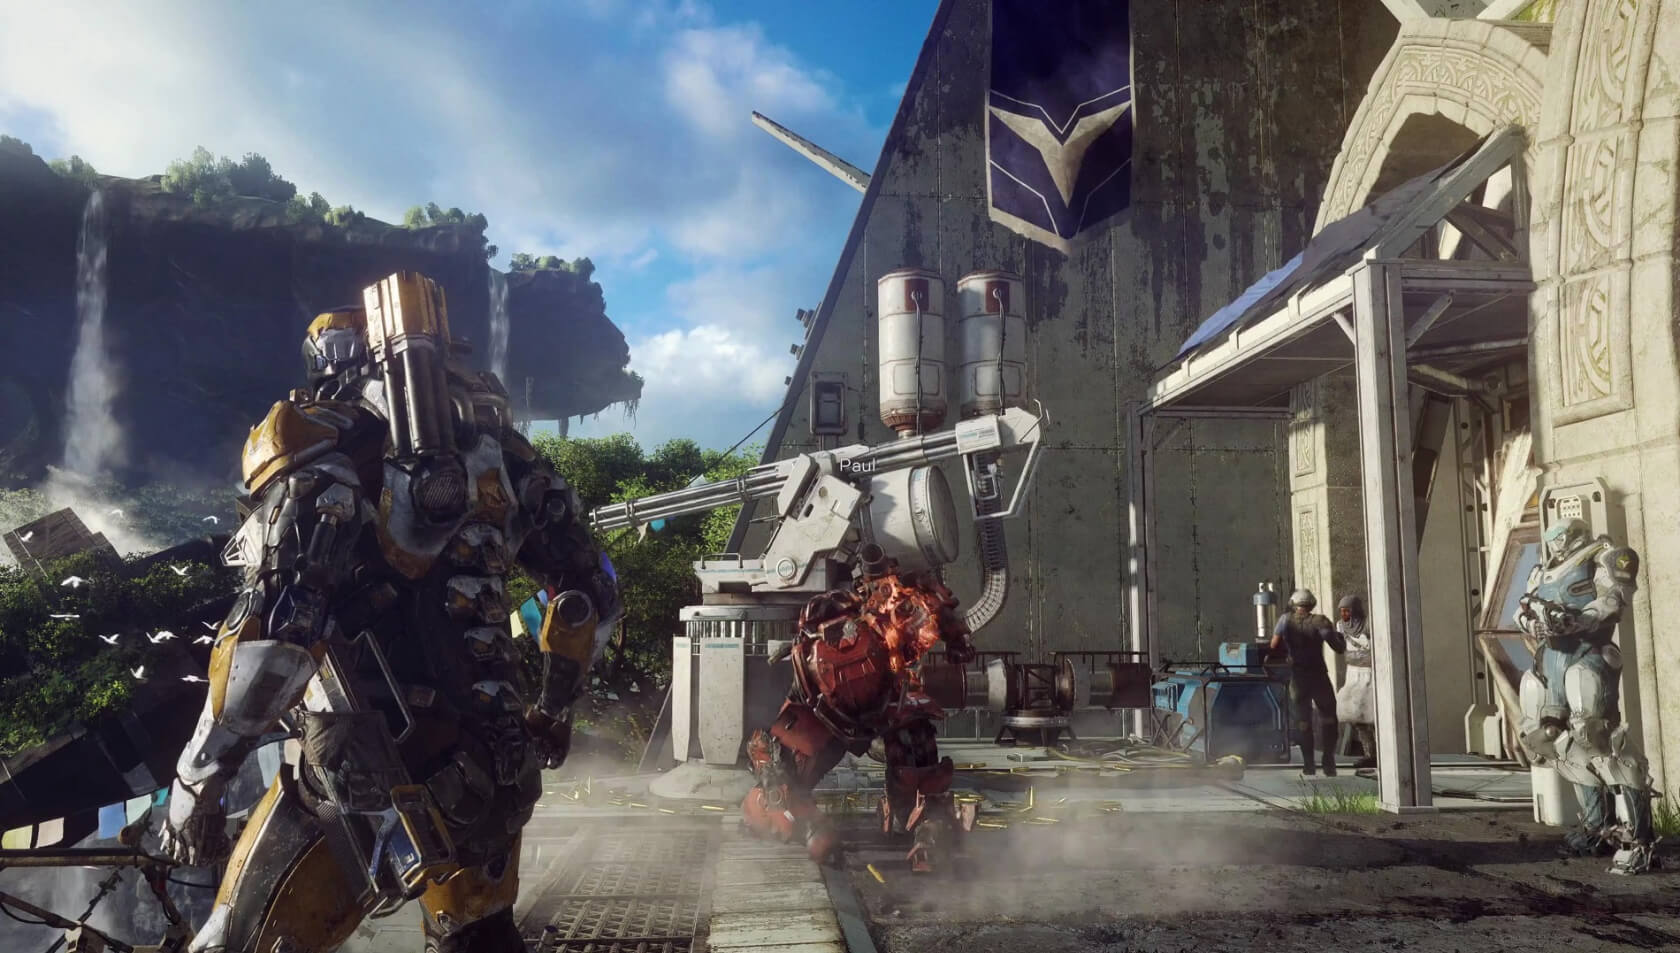 BioWare's Anthem reportedly delayed until 2019